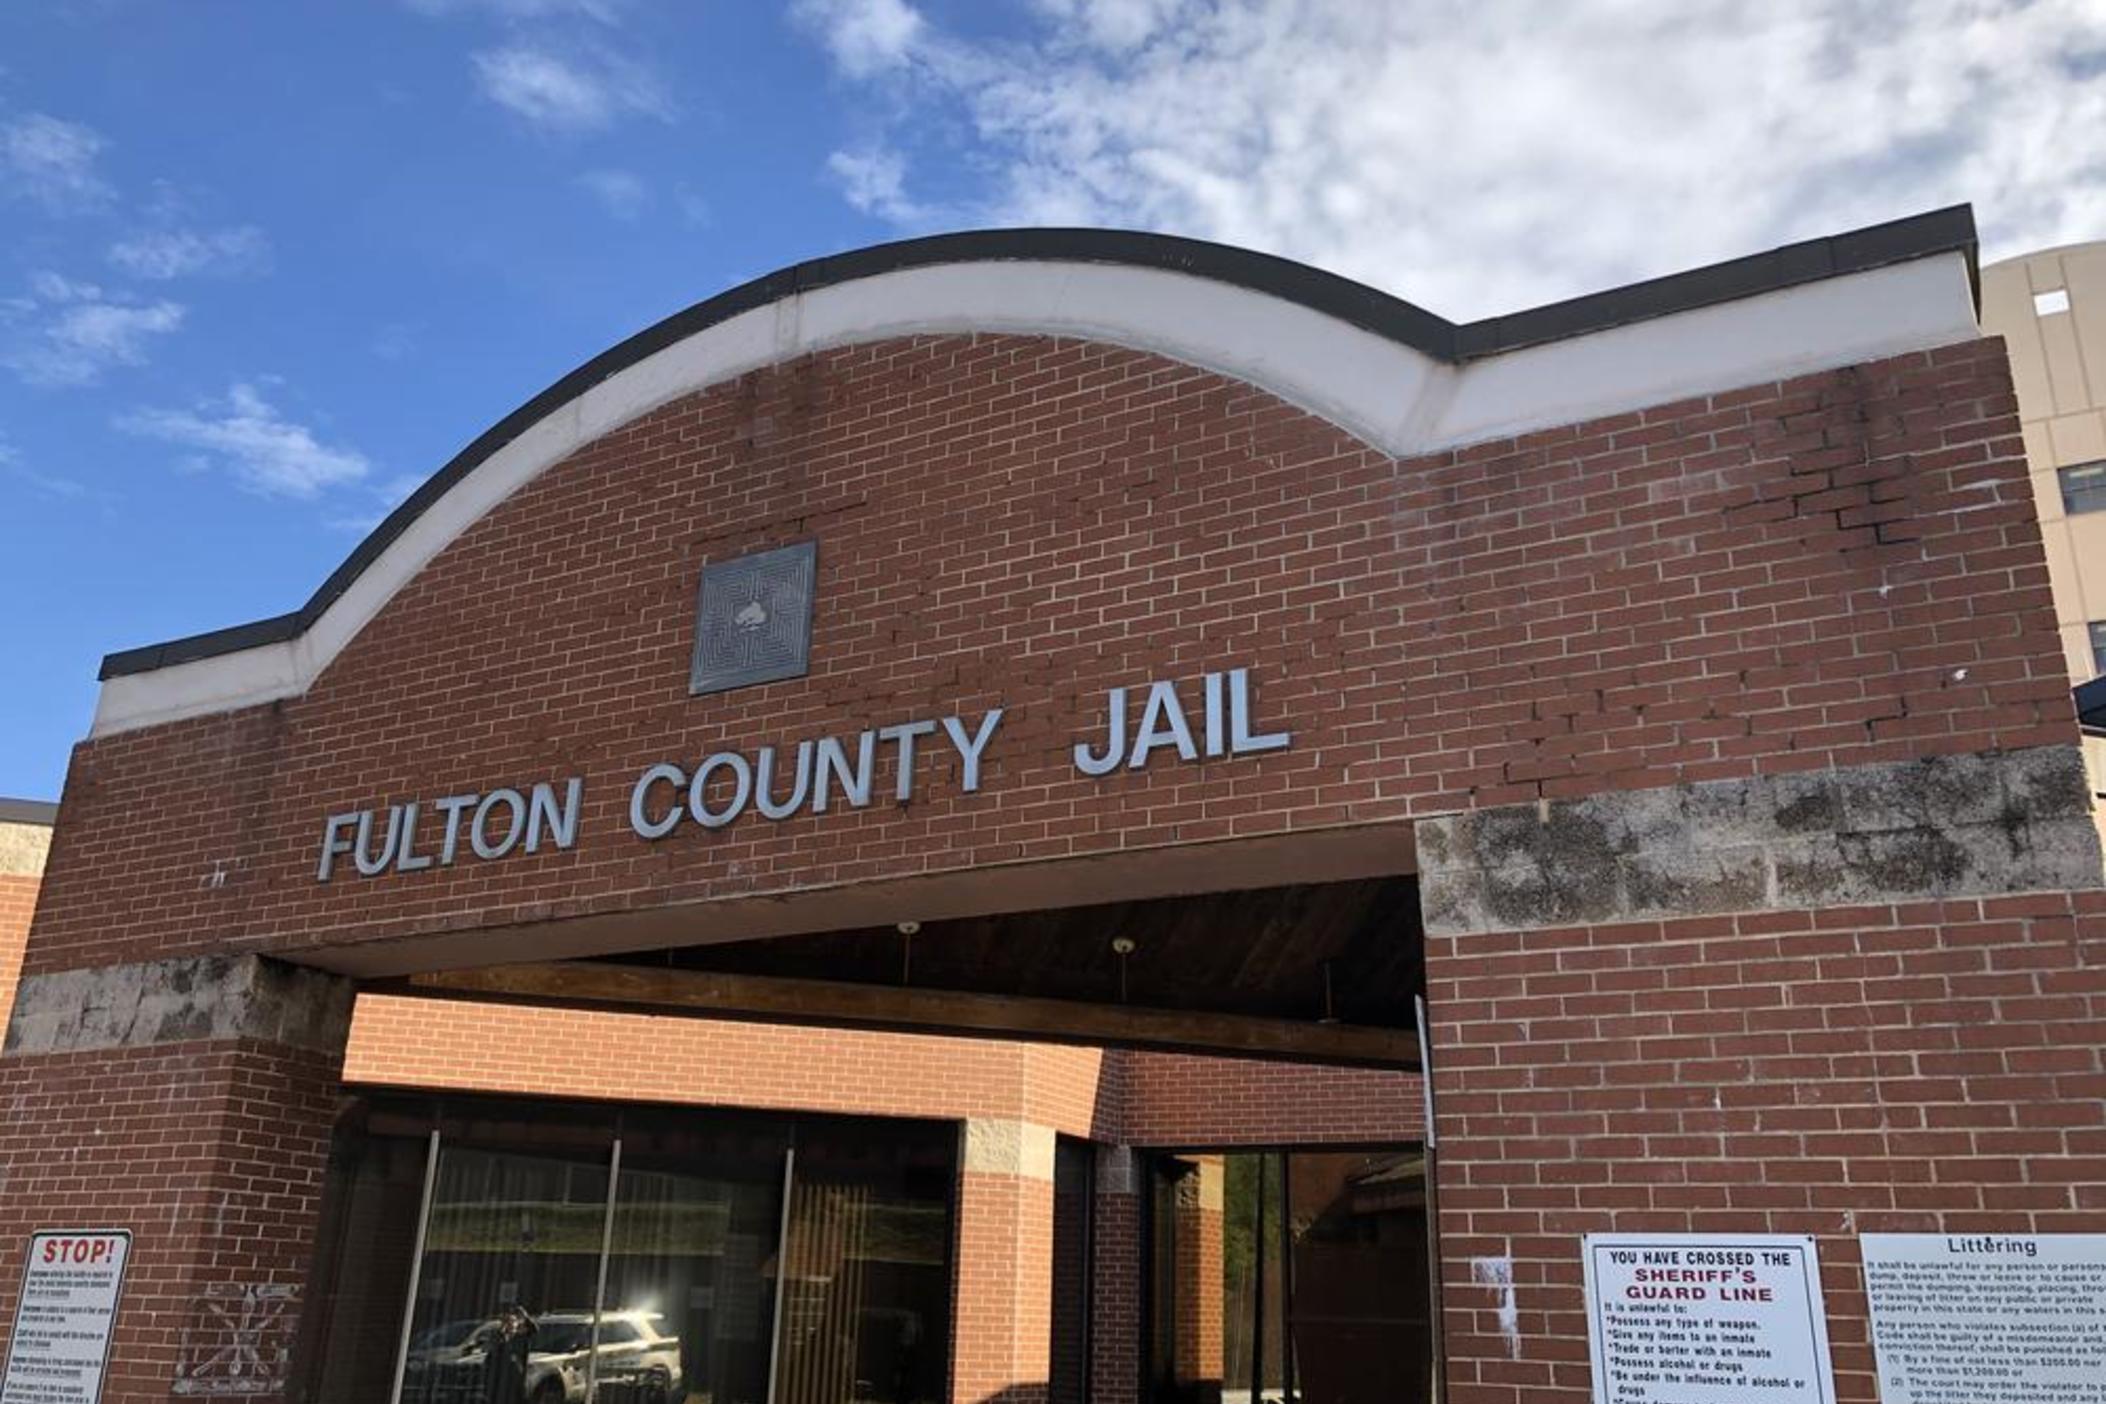 A photo outside the Fulton County Jail